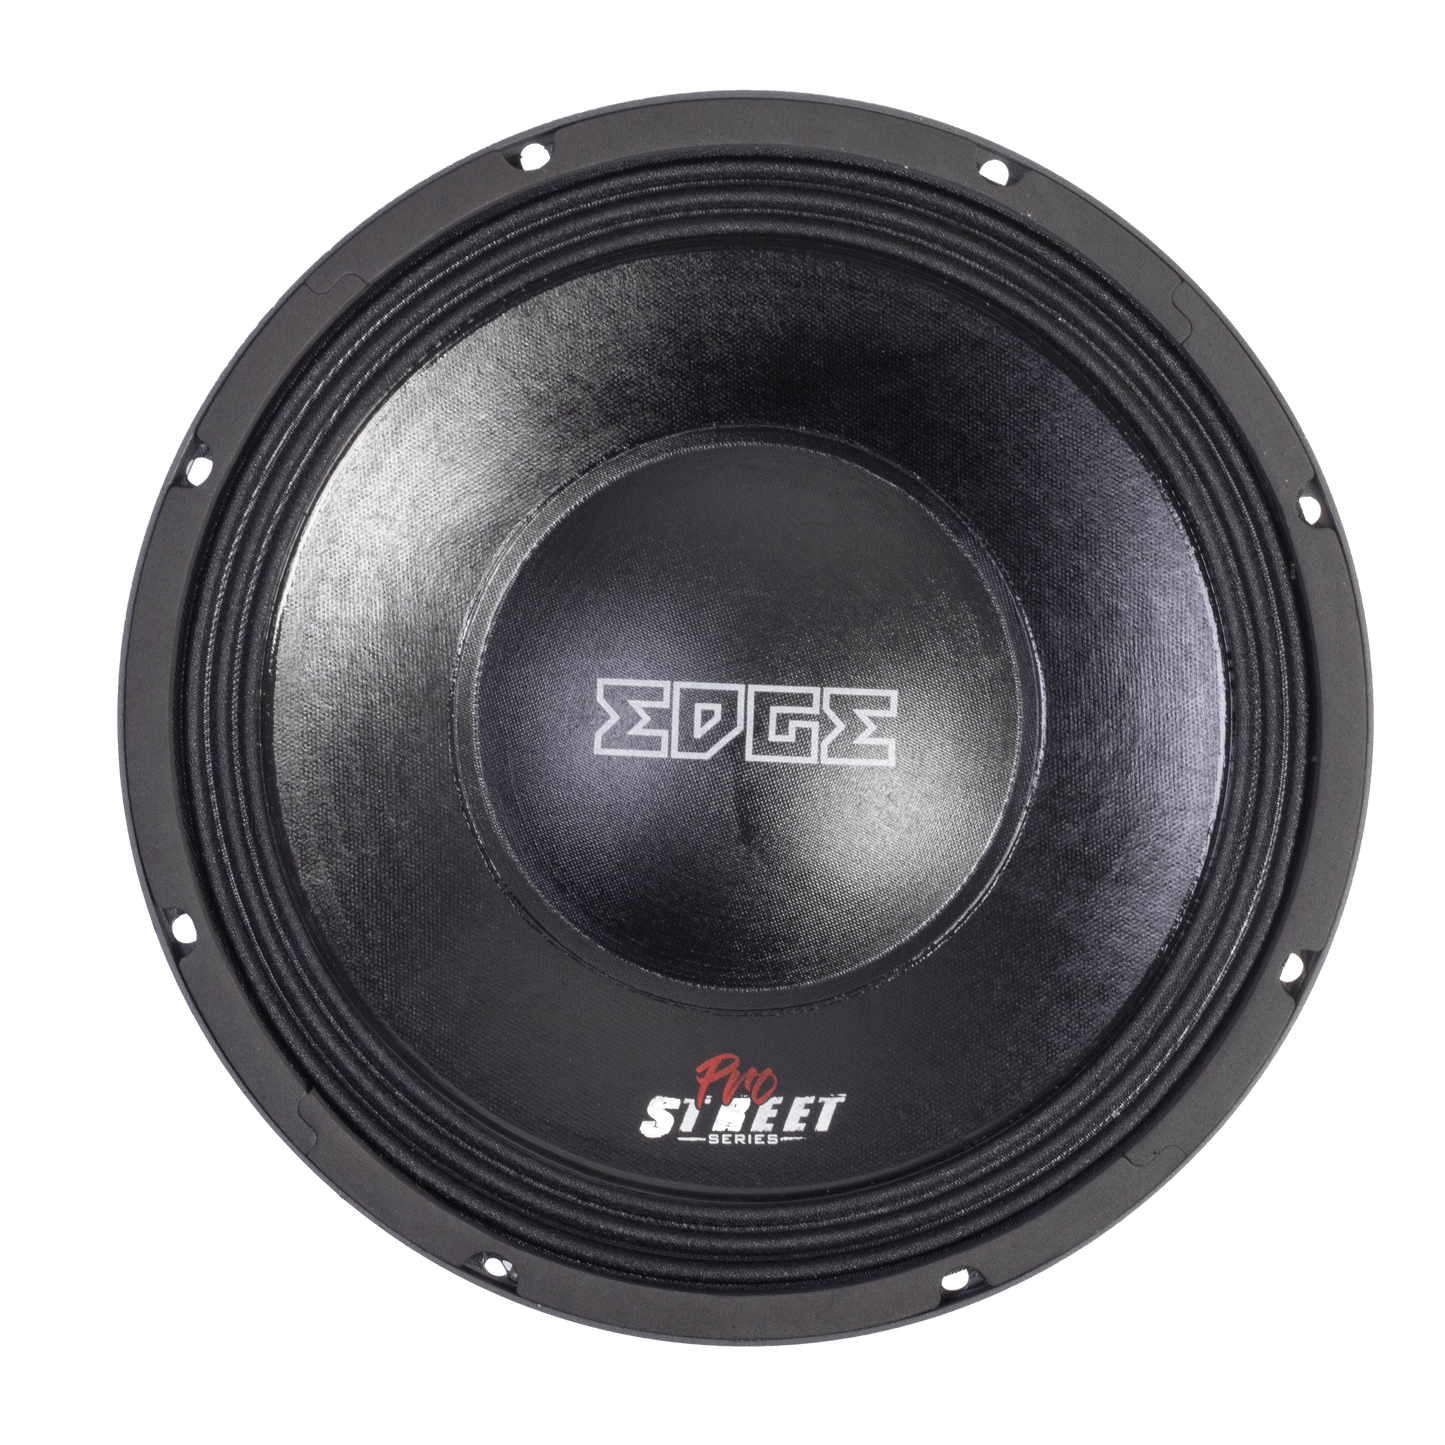 EDSPRO12W-E3 | EDGE Street Series 12 inch 2000 watts Pro Audio Subwoofer